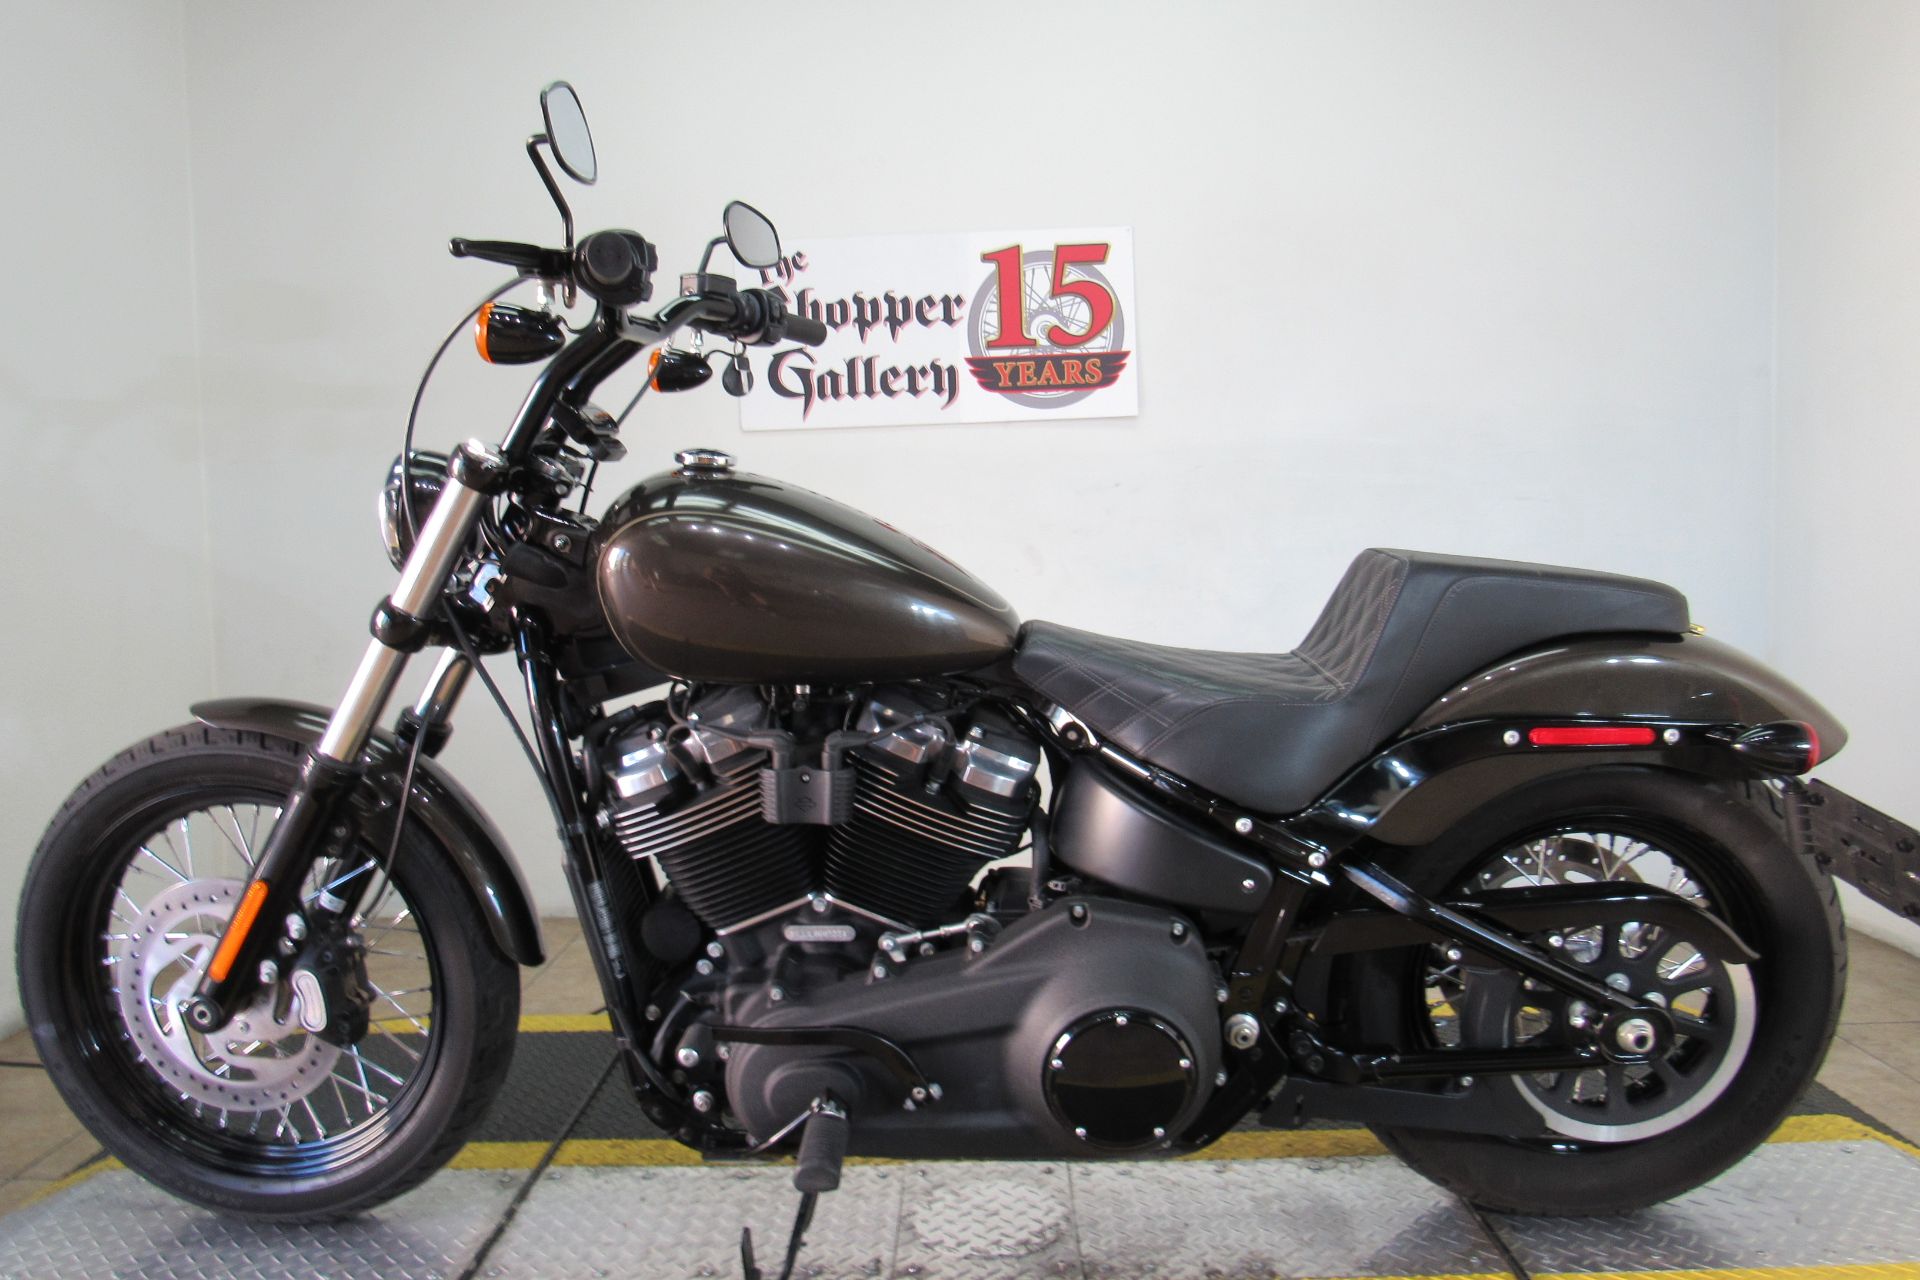 2020 Harley-Davidson Street Bob® in Temecula, California - Photo 2